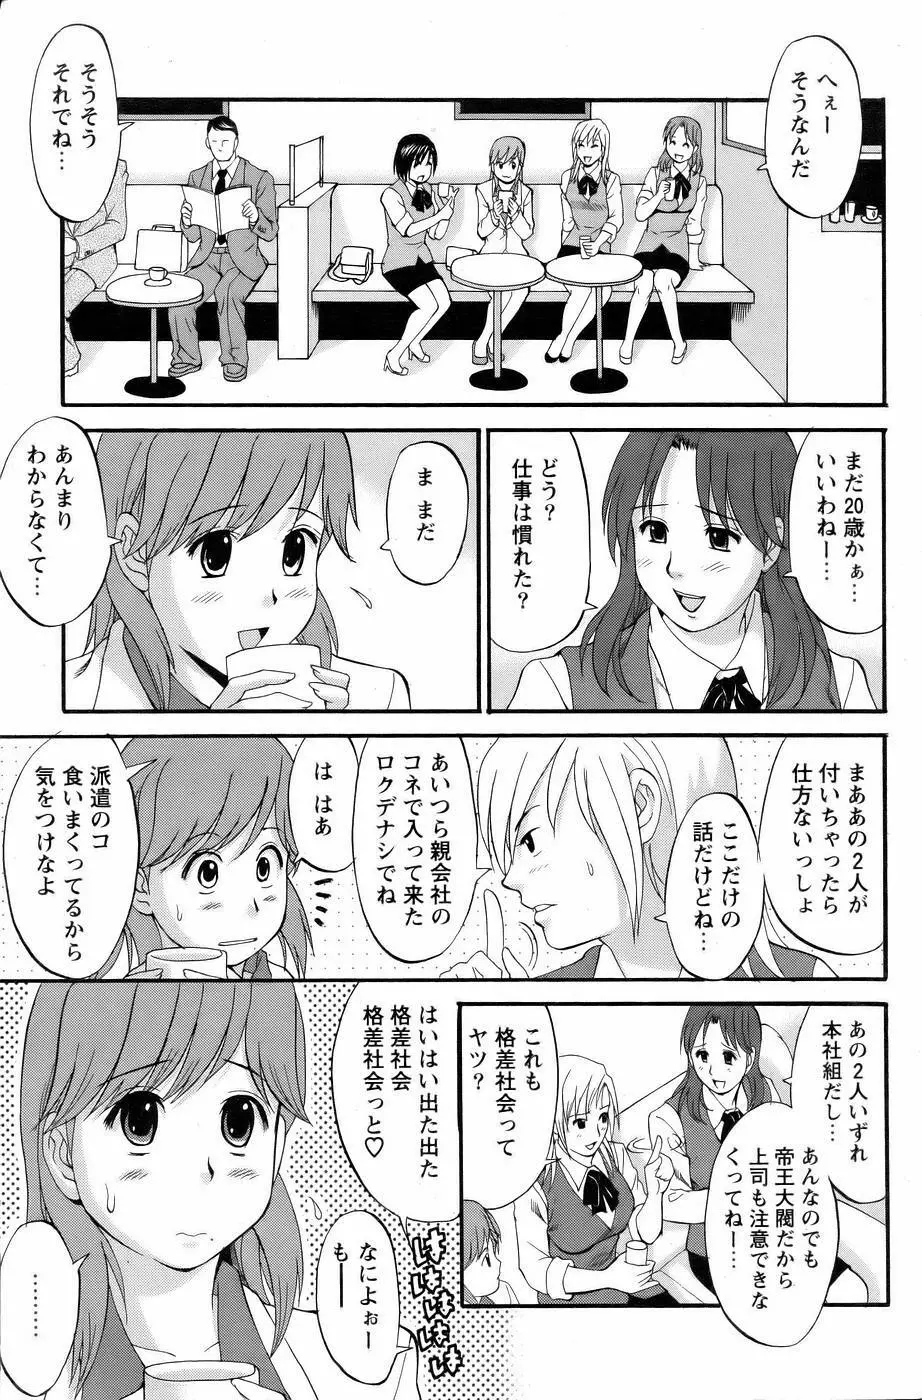 Haken no Muuko San 3 8ページ